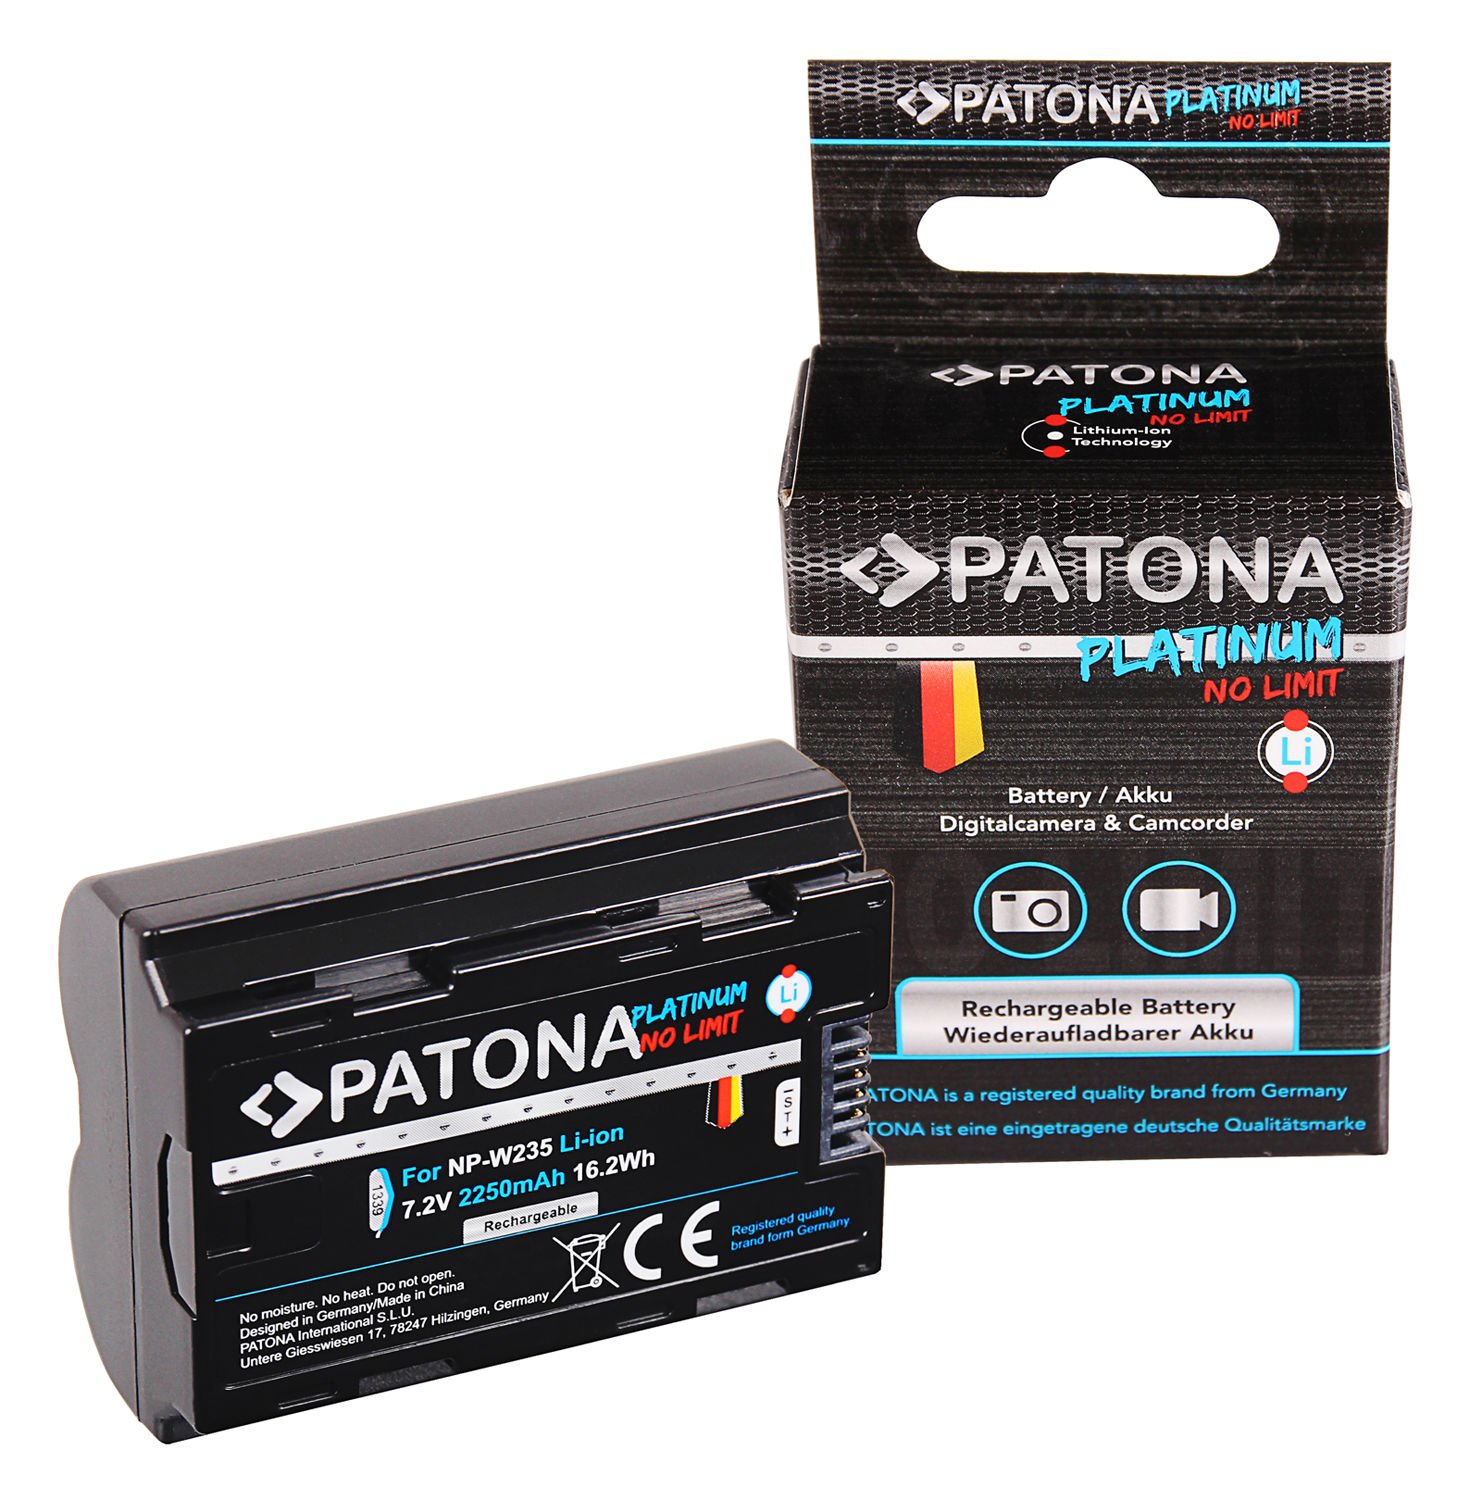 Patona Platinum Fuji NP-W235 Batarya Pil 1339